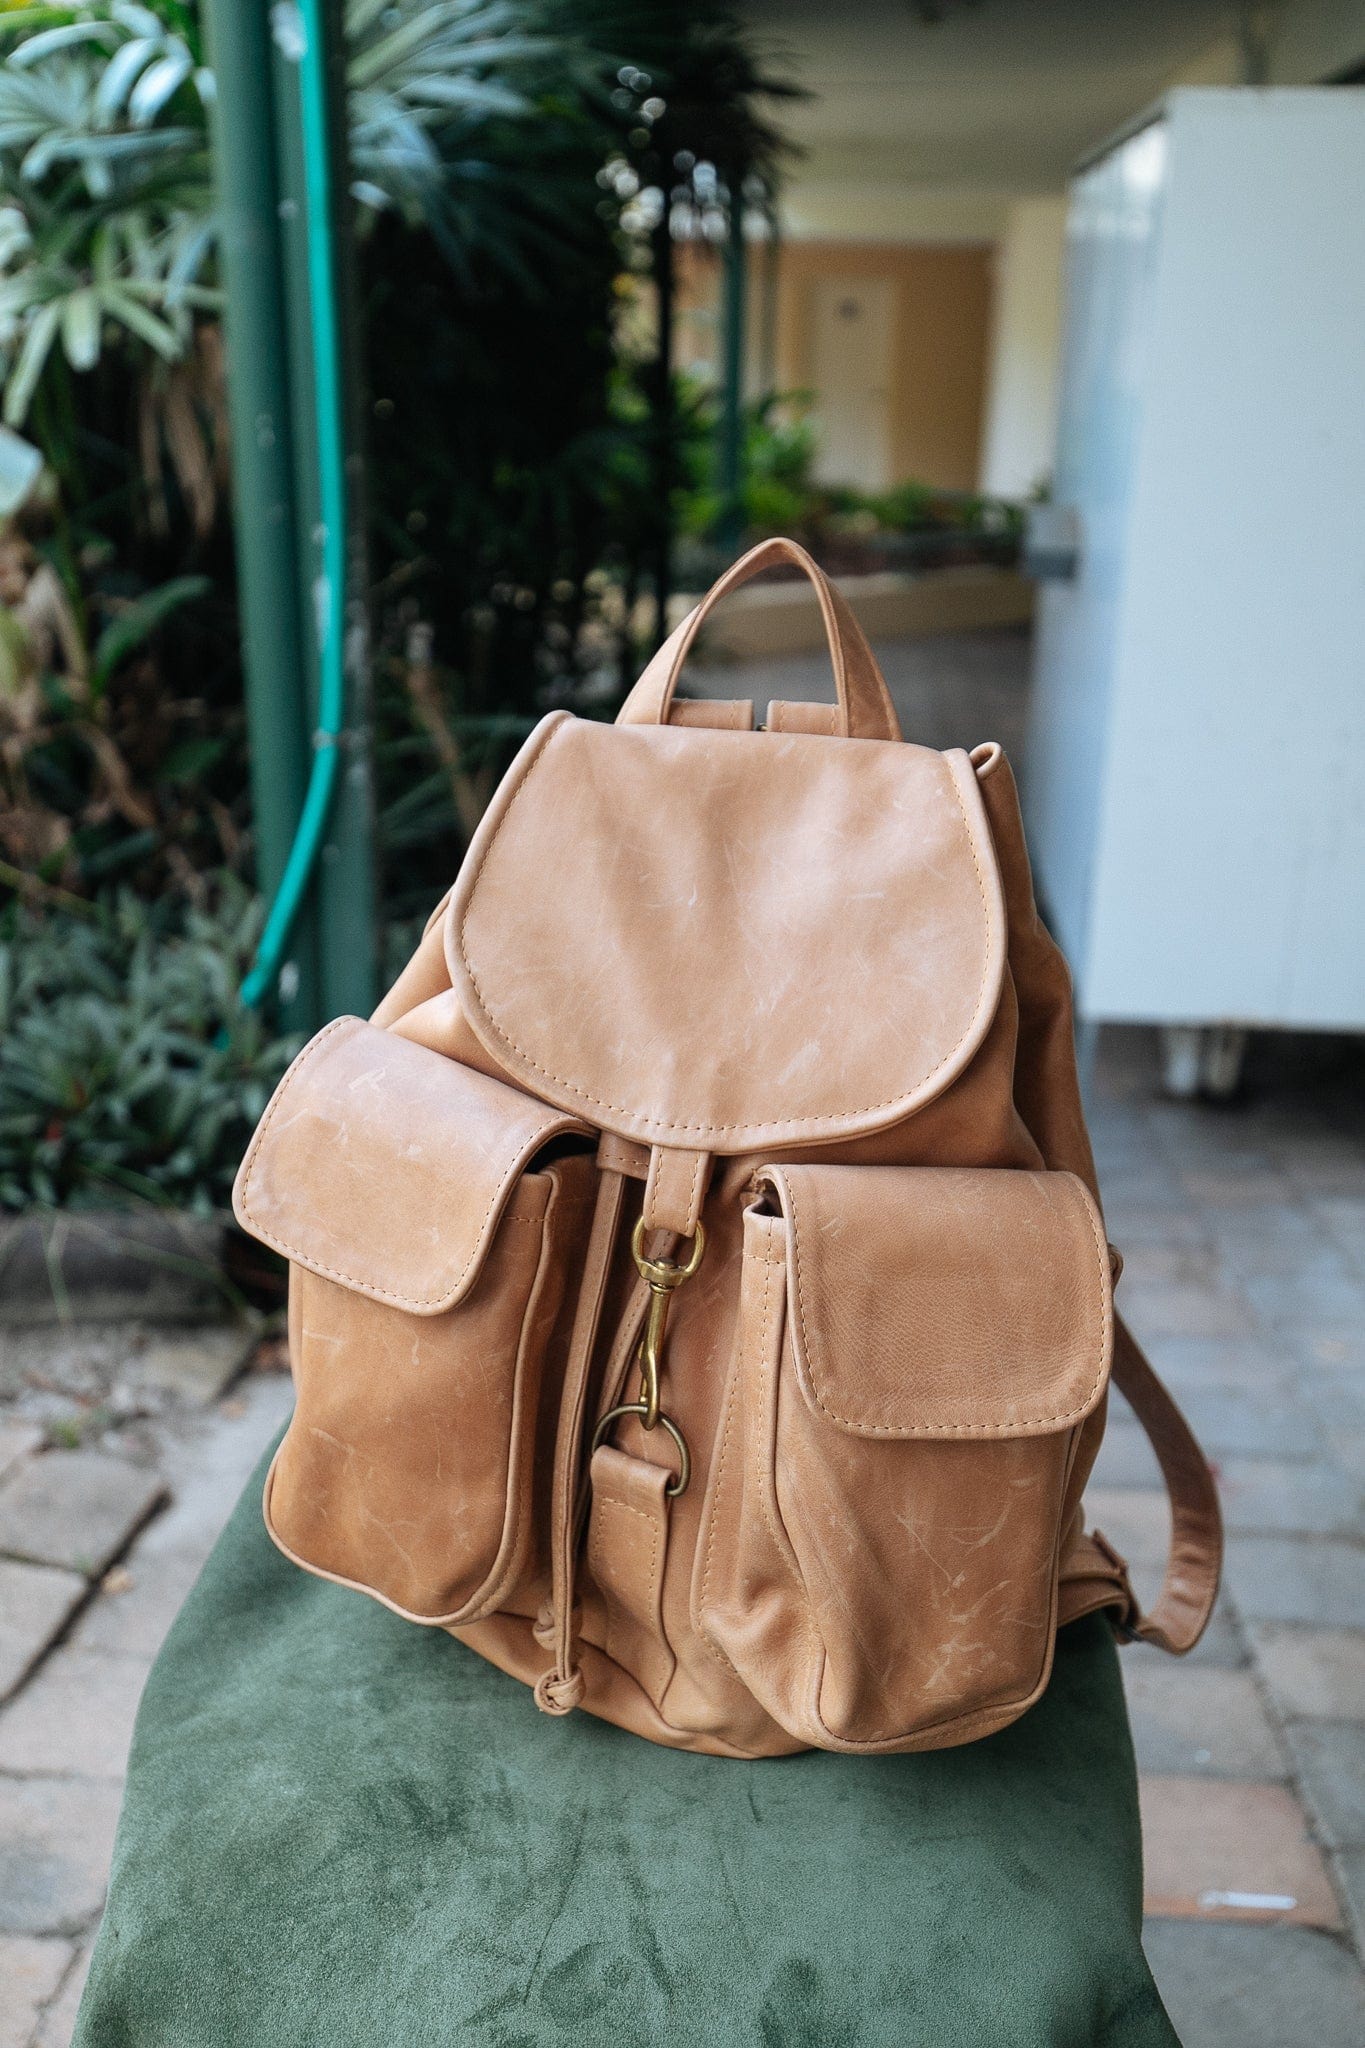 The Real McCaul Back Packs Light Tan Pocket Backpack - Medium - Cowhide Australian Made Australian Owned Medium Pocket Leather Backpack- Made in Australia 